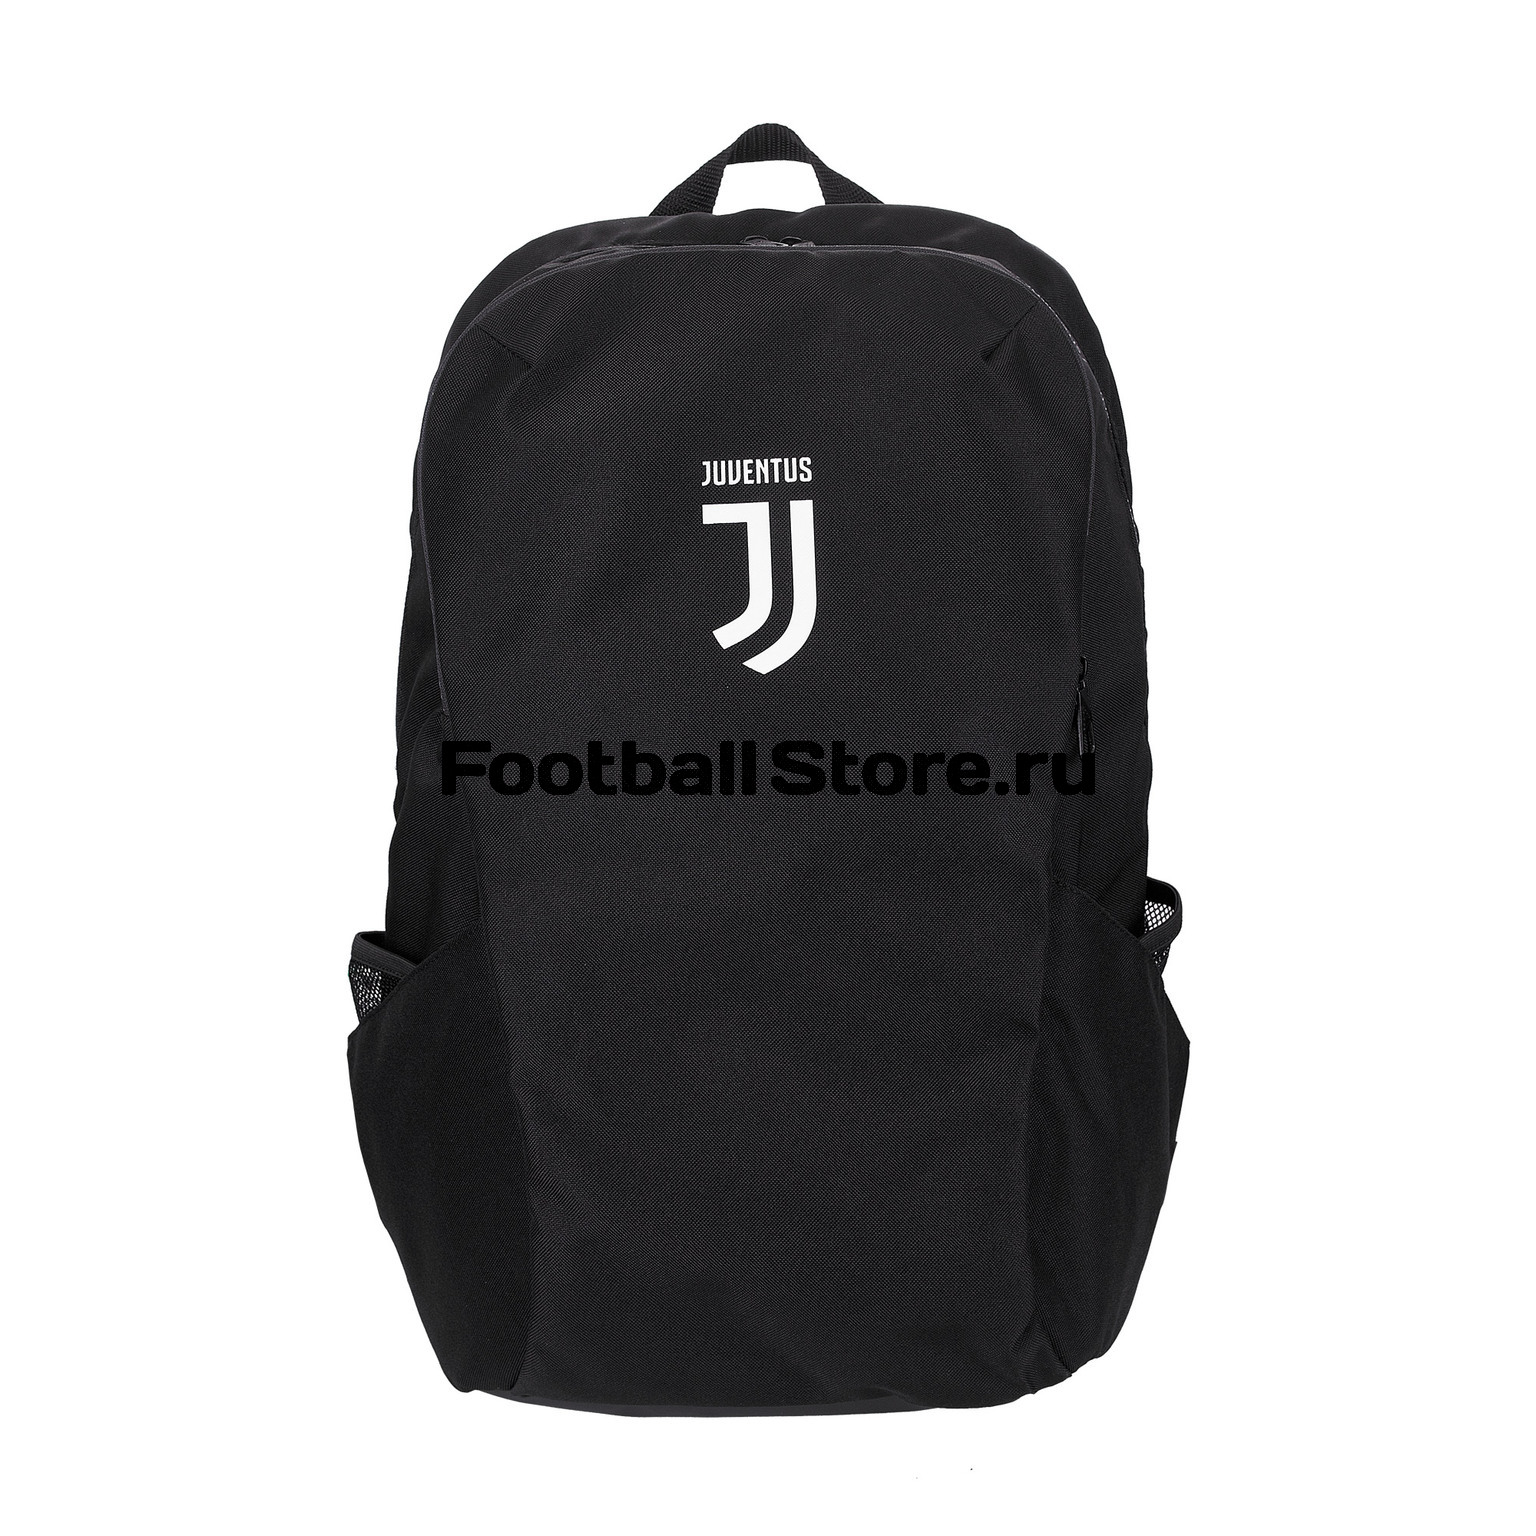 Рюкзак Adidas Juventus ID DY7524